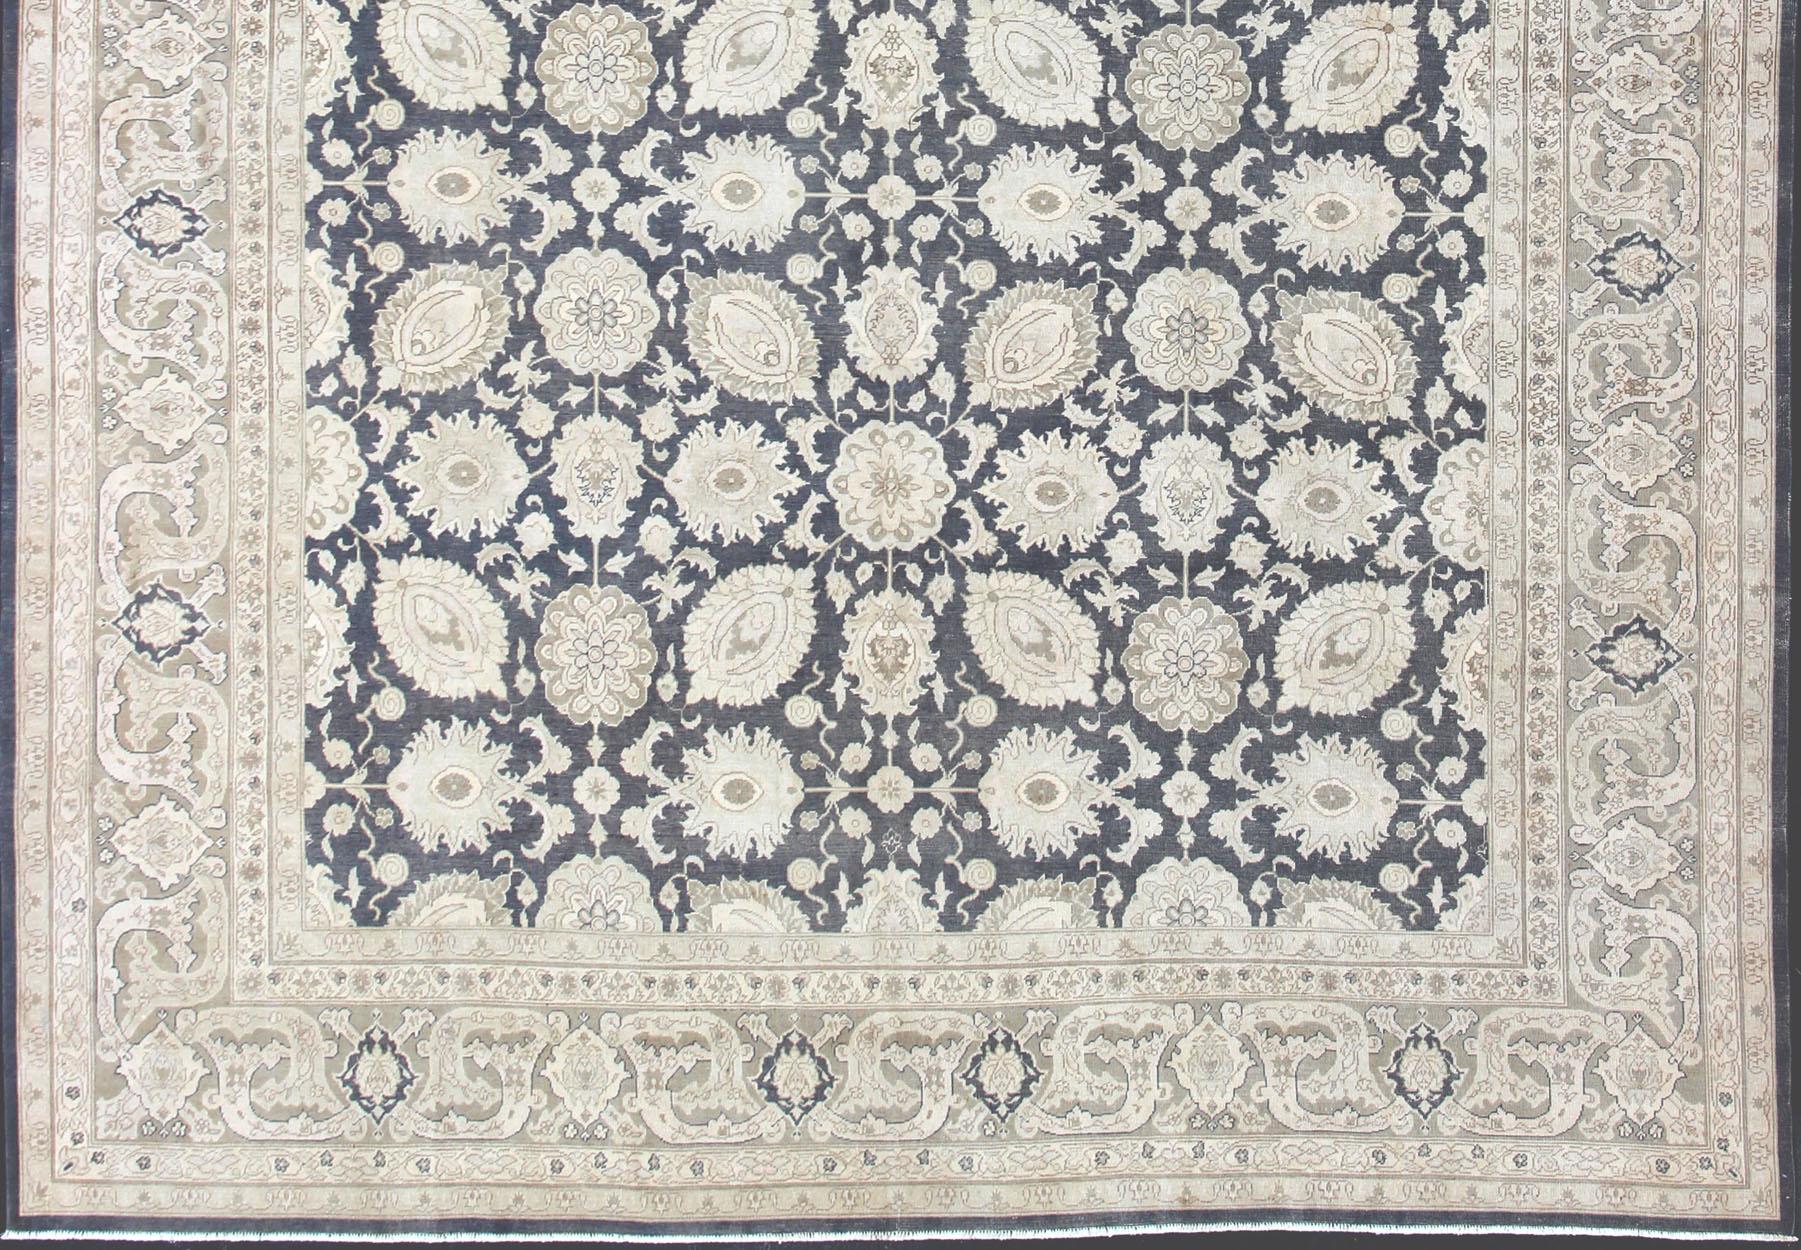 Steel Gray background, tan and gray Tabriz rug from Persia with Repeating Geometric design. Keivan Woven Arts / rug SUS-2009-516, country of origin / type: Iran / Tabriz, circa 1940
Measures: 11'5 x 15'11.
This vintage Persian Tabriz carpet (circa